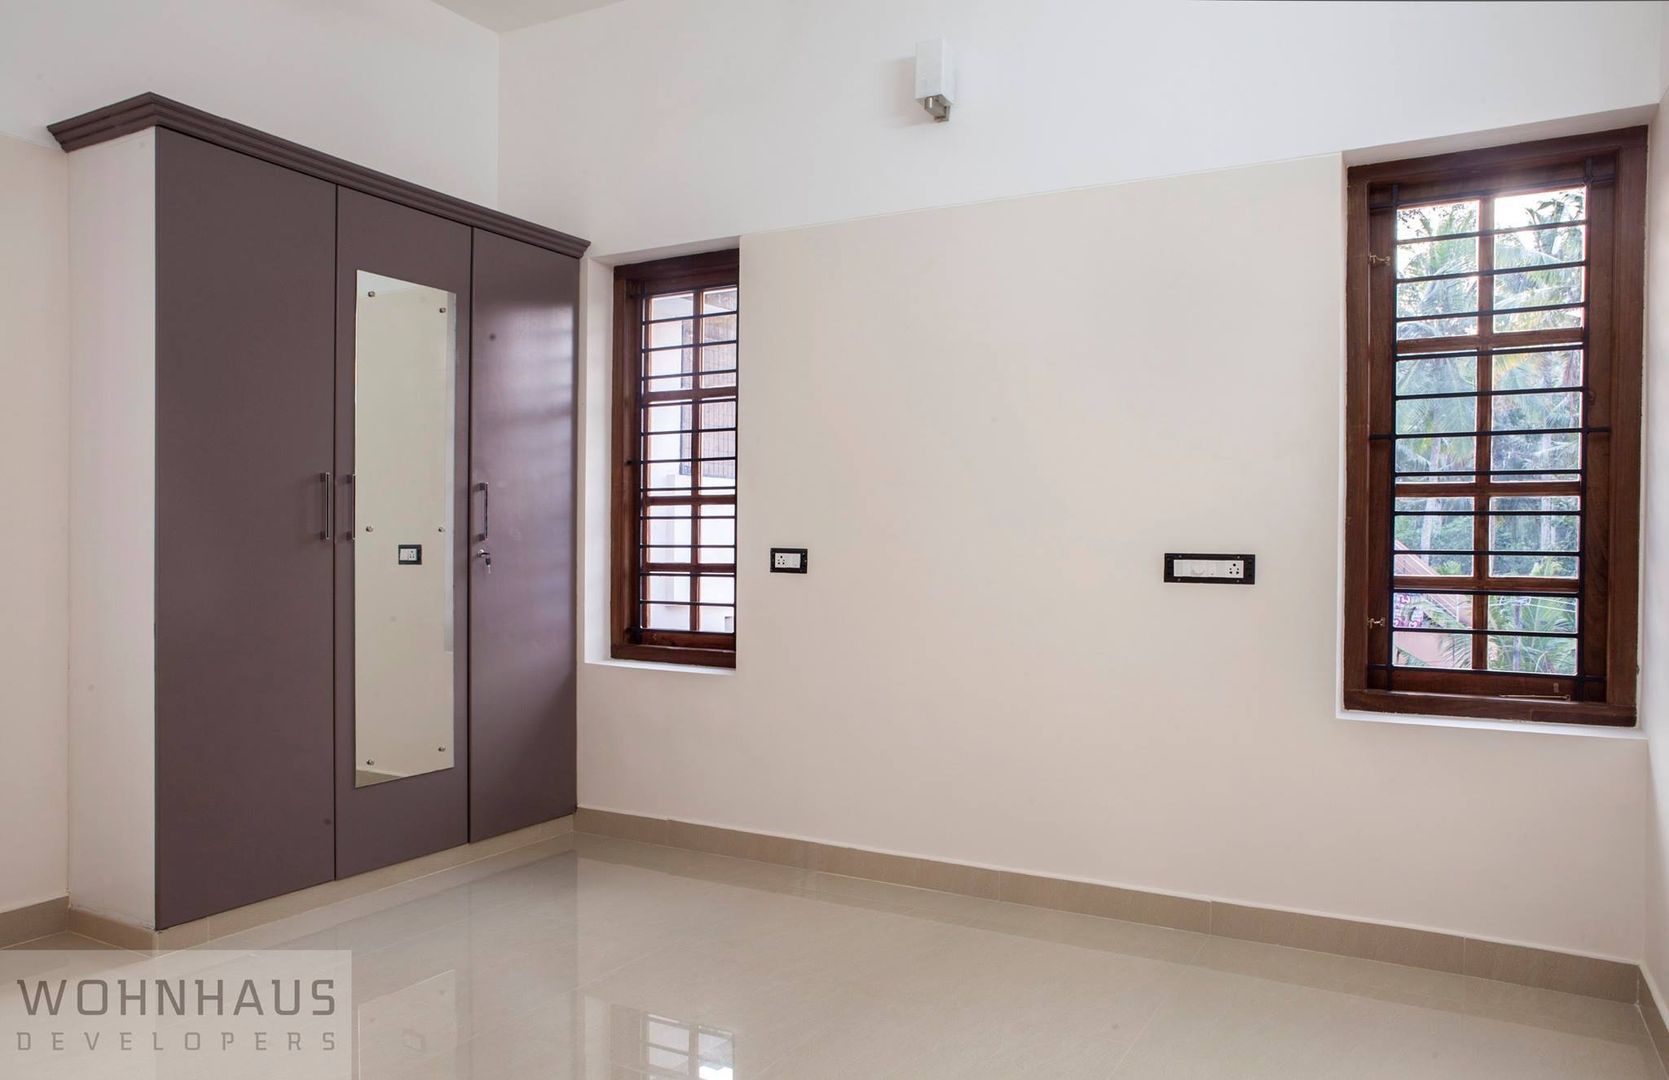 1400sqft House in Trivandrum, Wohnhaus Developers Wohnhaus Developers Dormitorios de estilo moderno Cerámico